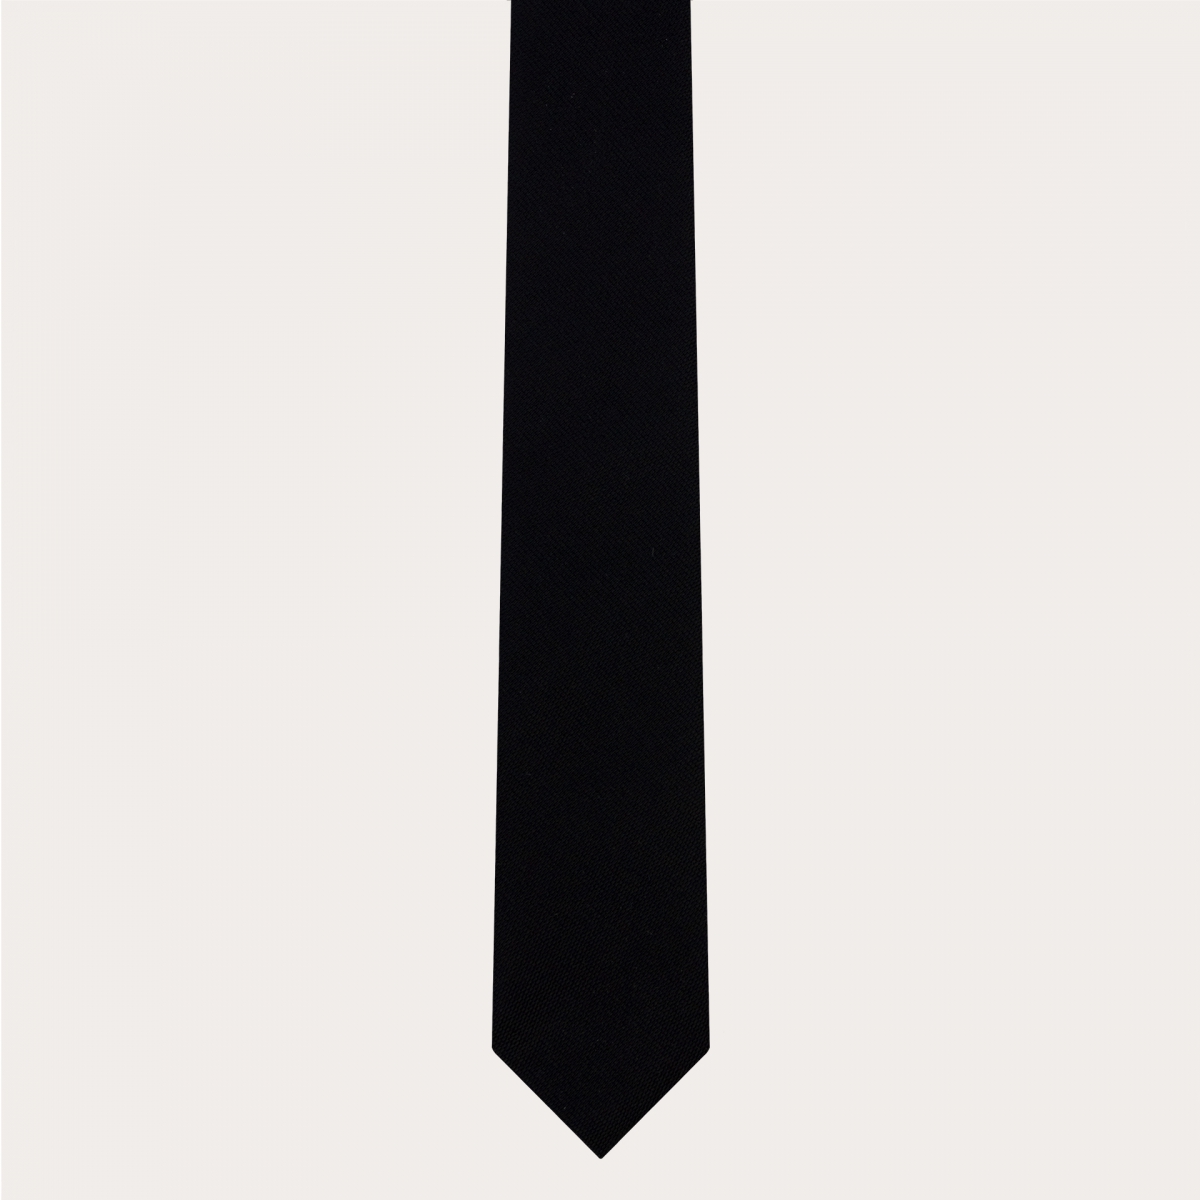 Corbata fina clásica en pura seda, negra